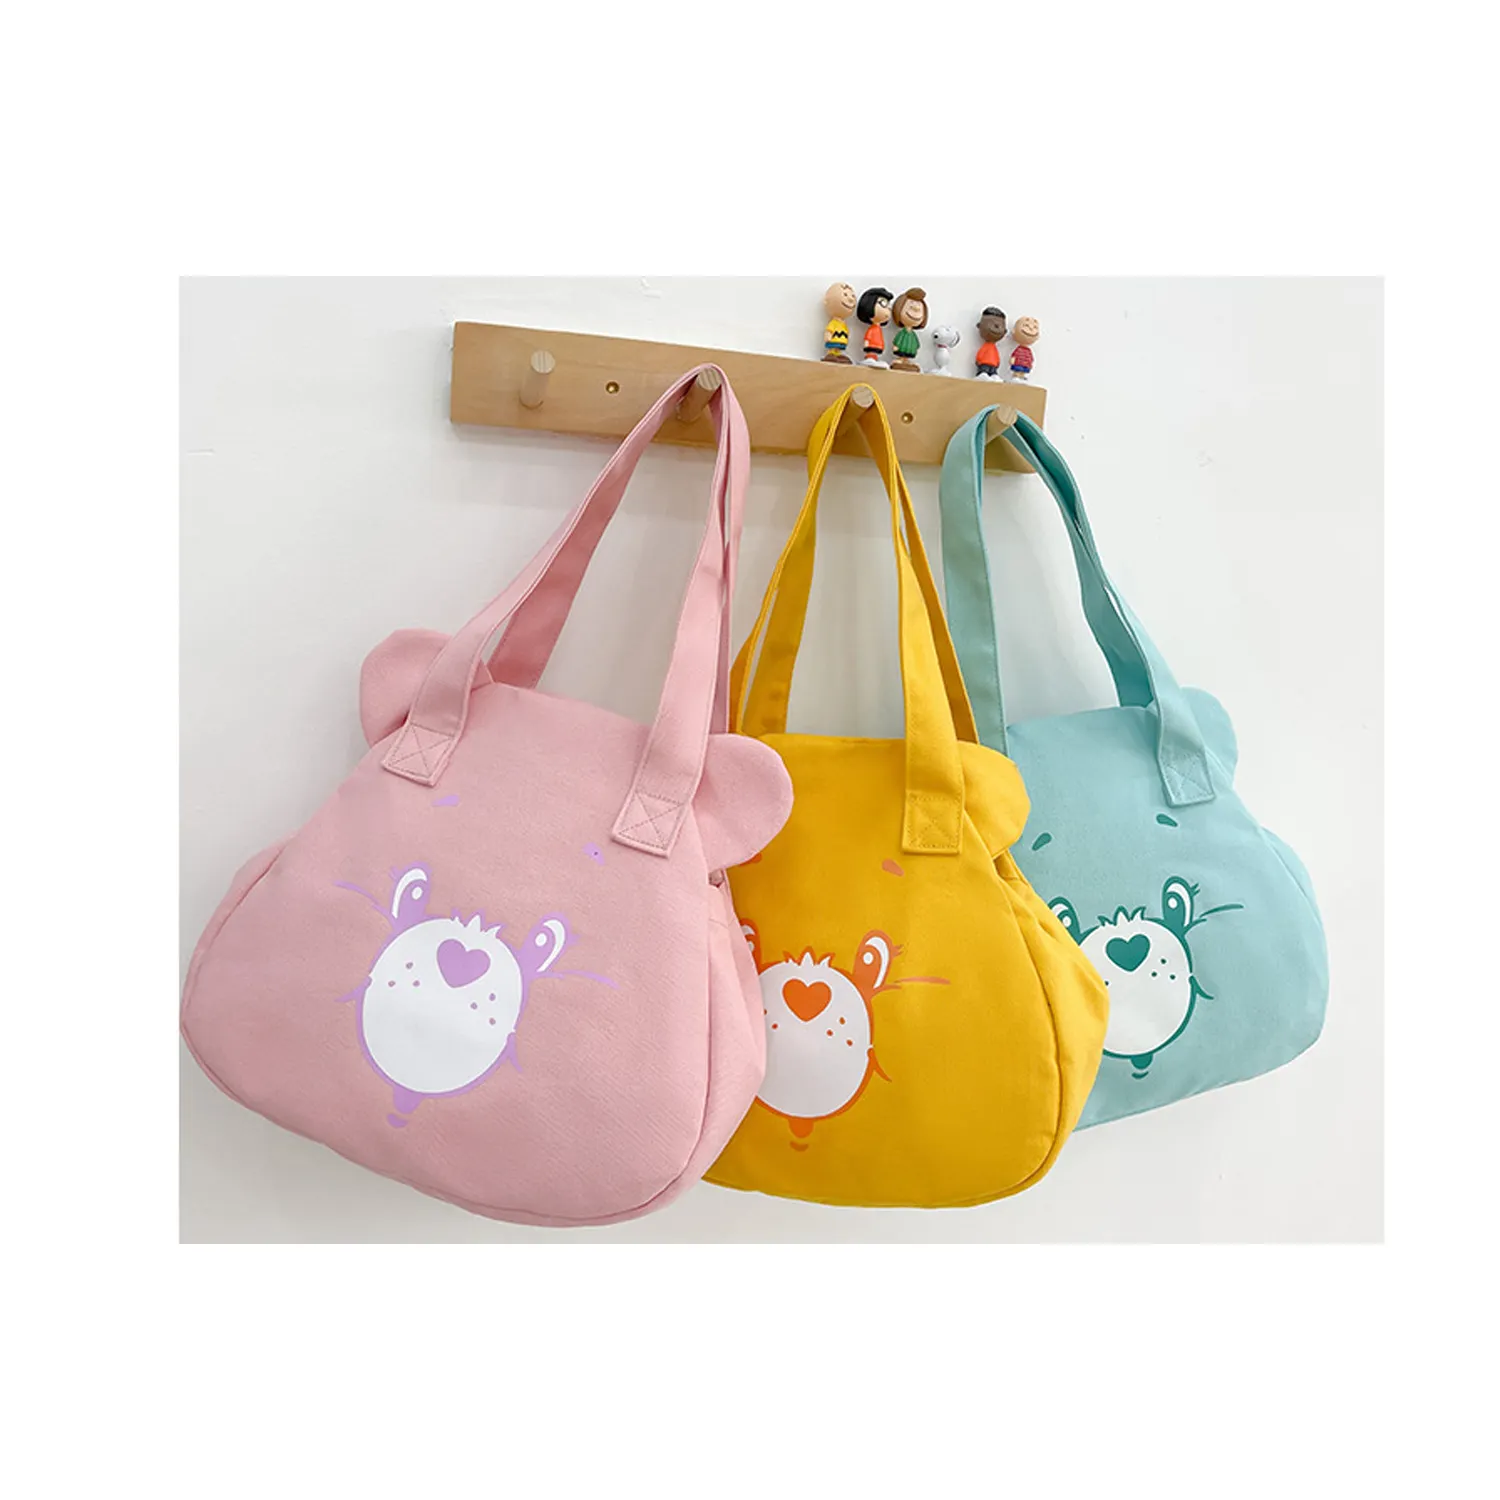 Bambini all'ingrosso cute cartoon bear prints tote bag borsa a mano per bambine borsa a tracolla in tela ecologica per bambini